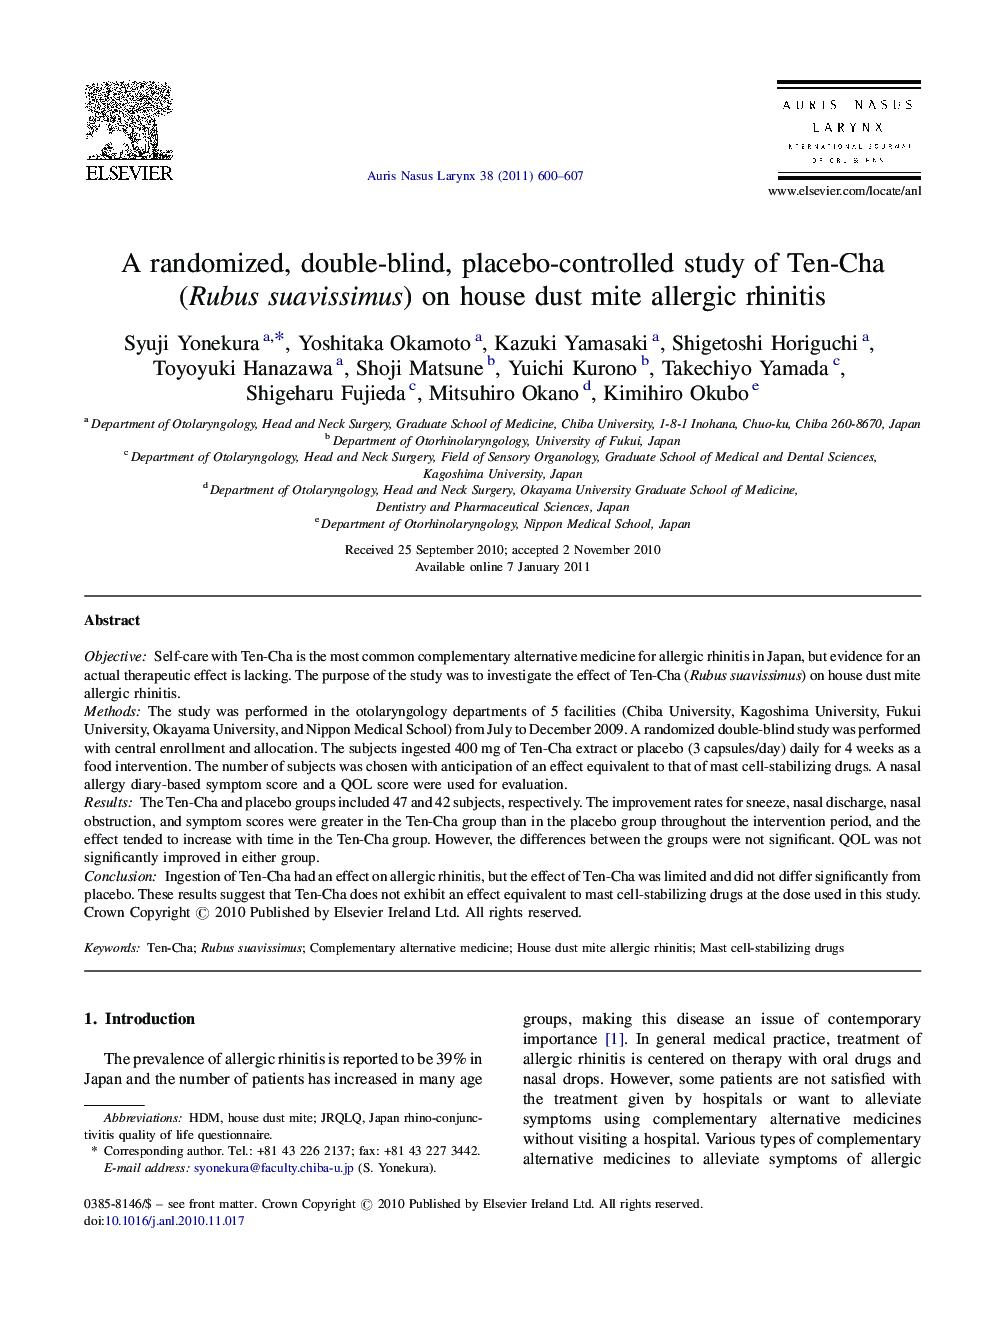 A randomized, double-blind, placebo-controlled study of Ten-Cha (Rubus suavissimus) on house dust mite allergic rhinitis